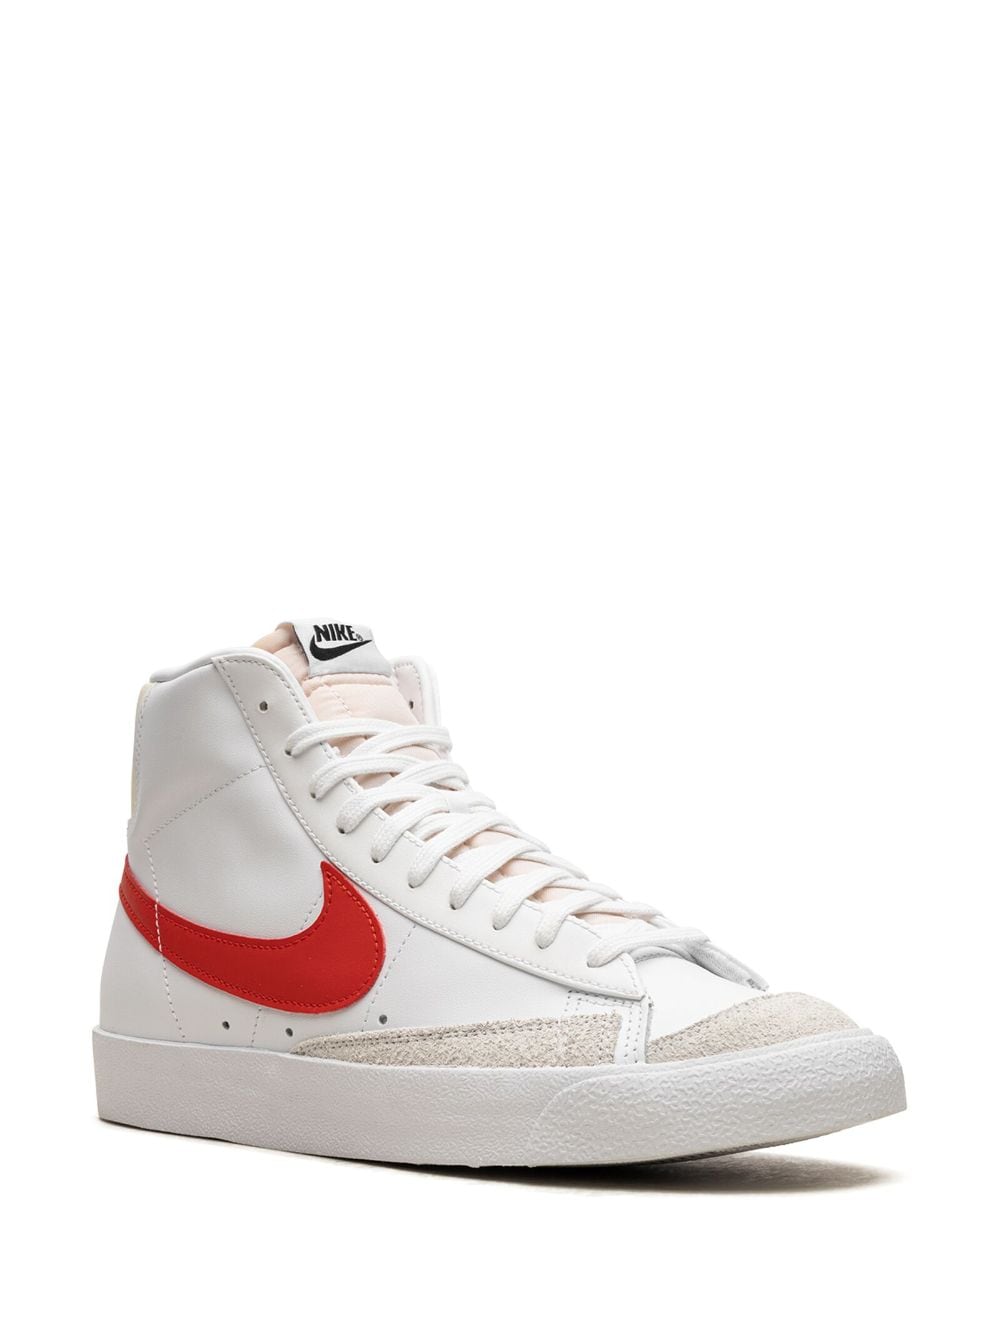 BLAZER MID '77 VINTAGE WHITE/PICANTE RED 运动鞋